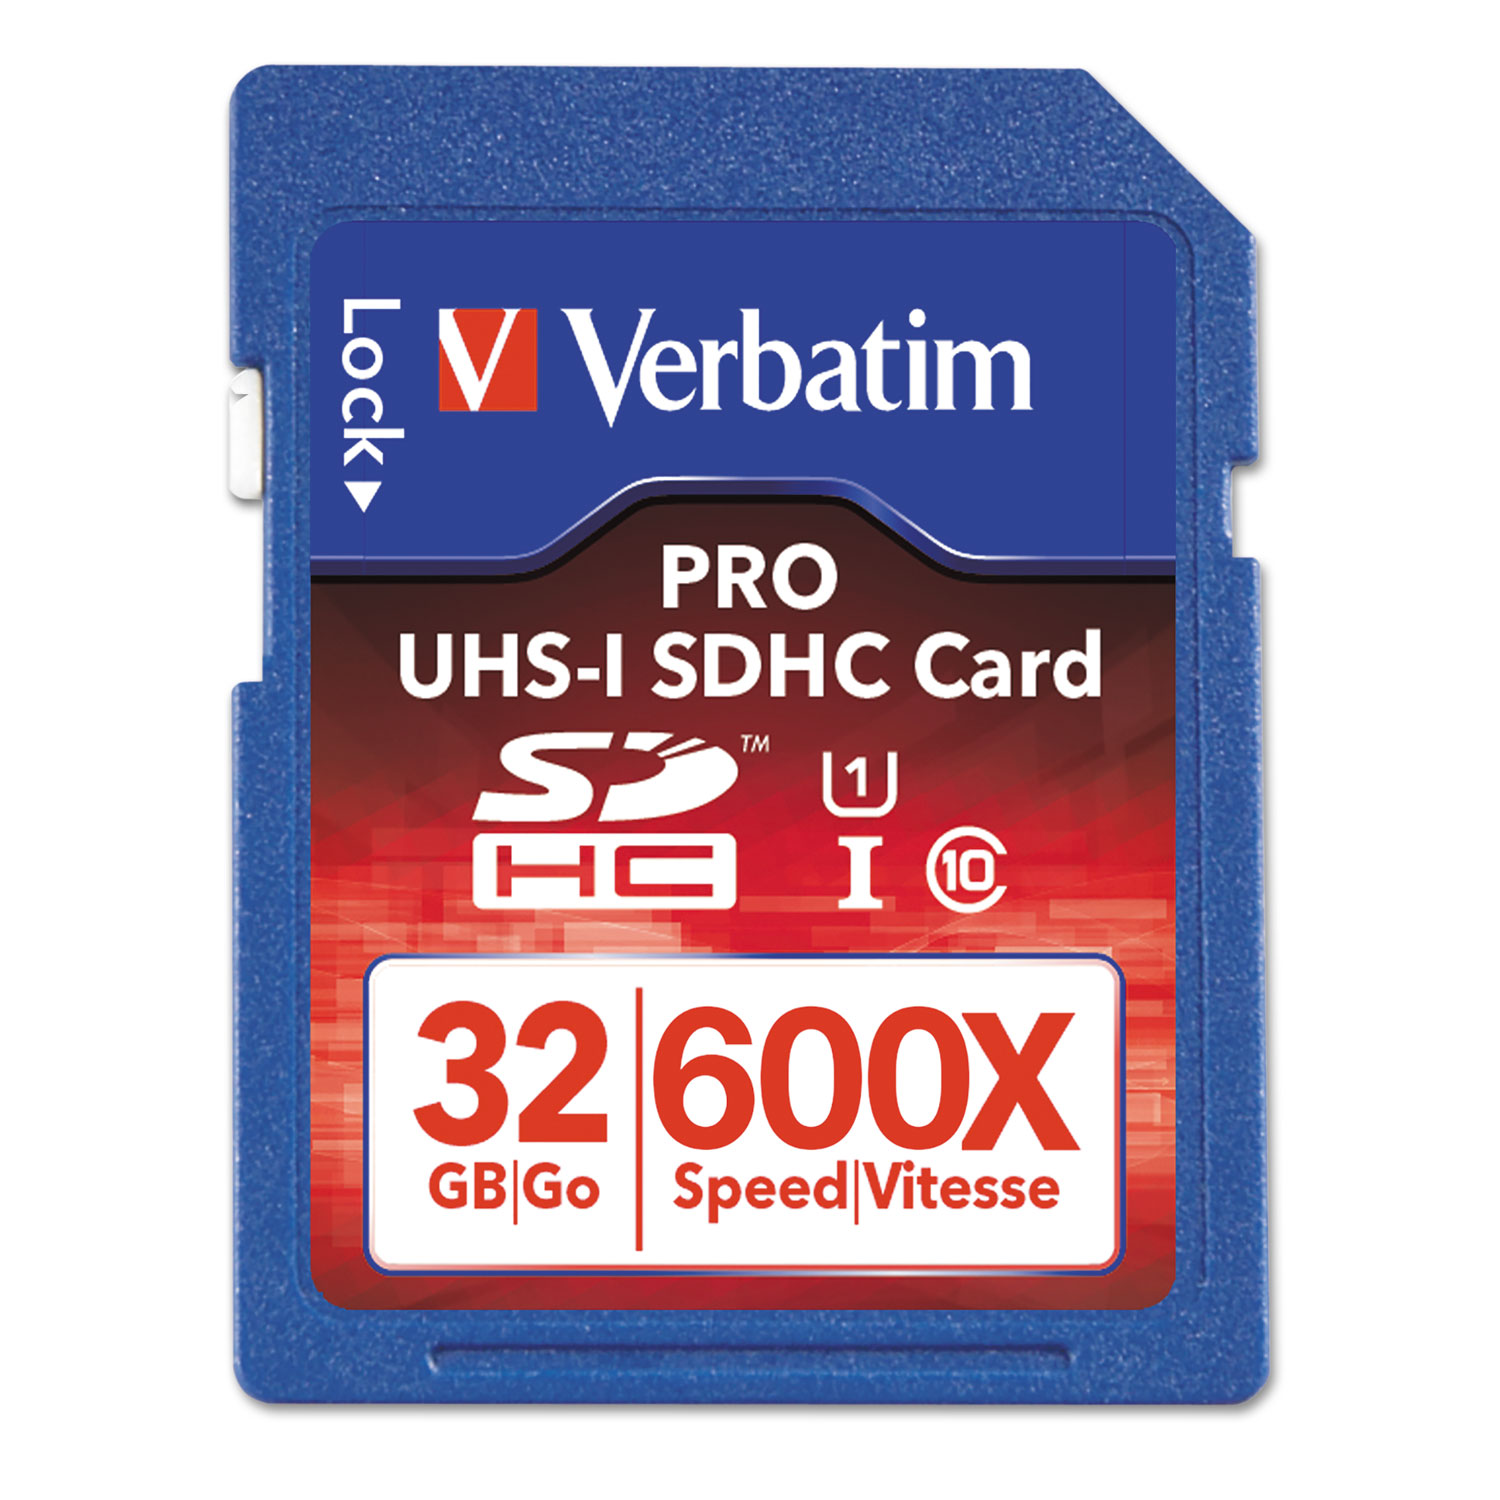 Pro 600X SDHC Memory Card, Class 10 UHS-1, 32GB